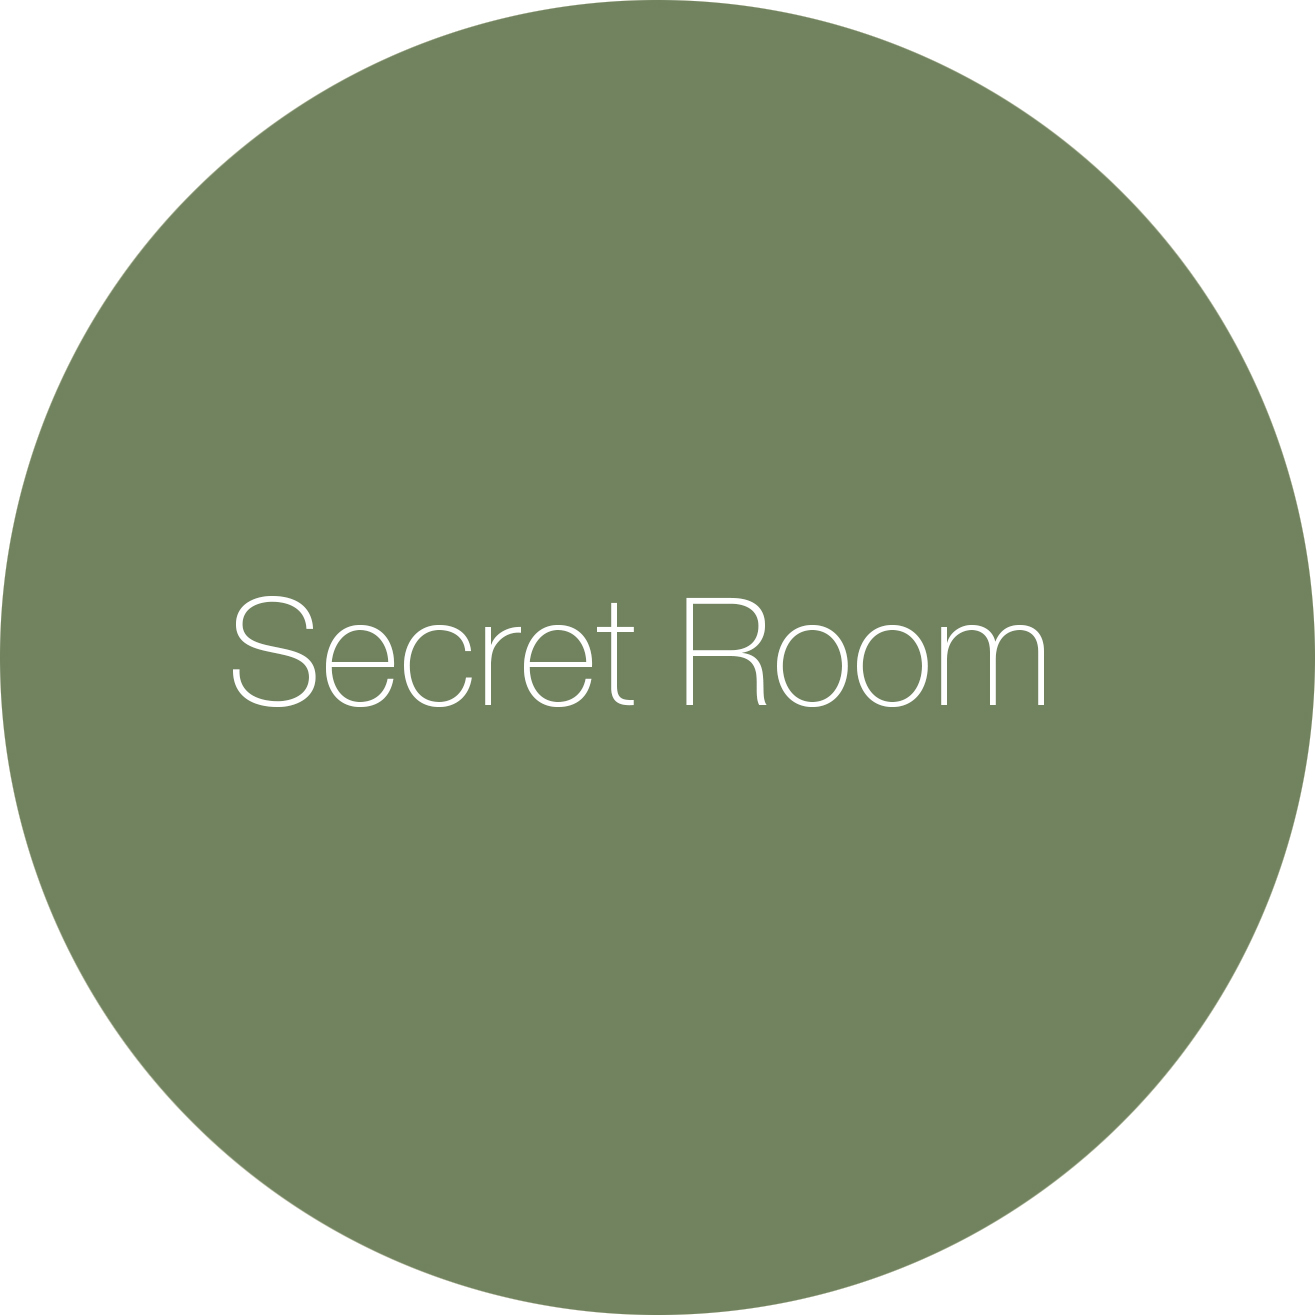 Secret Room by Earthborn